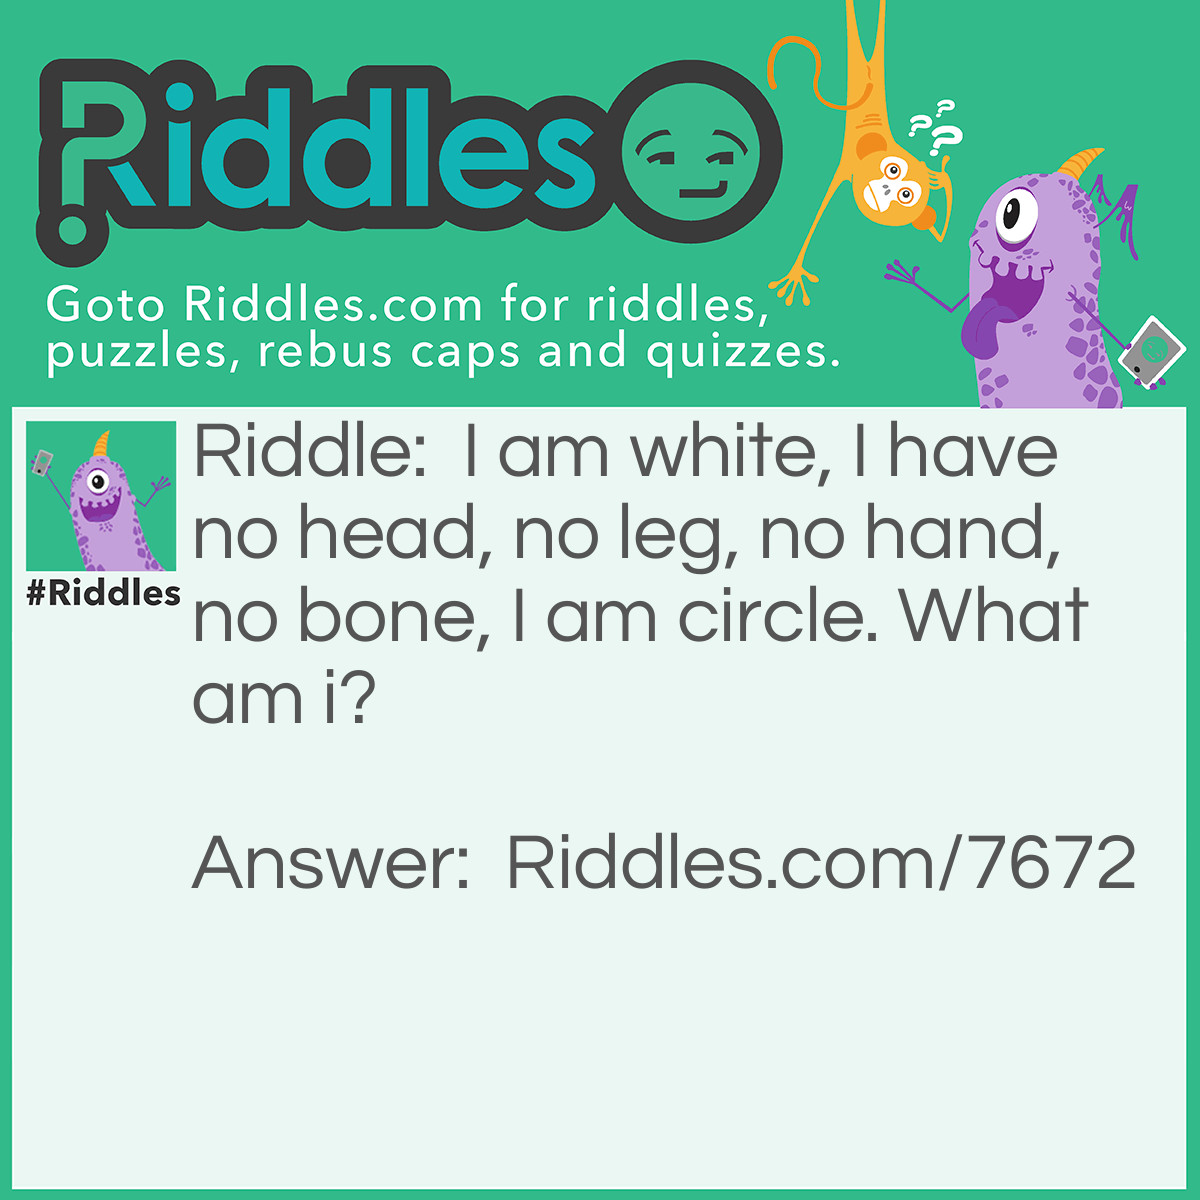 Riddle: I am white, I have no head, no leg, no hand, no bone, I am circle. What am i? Answer: An Egg.